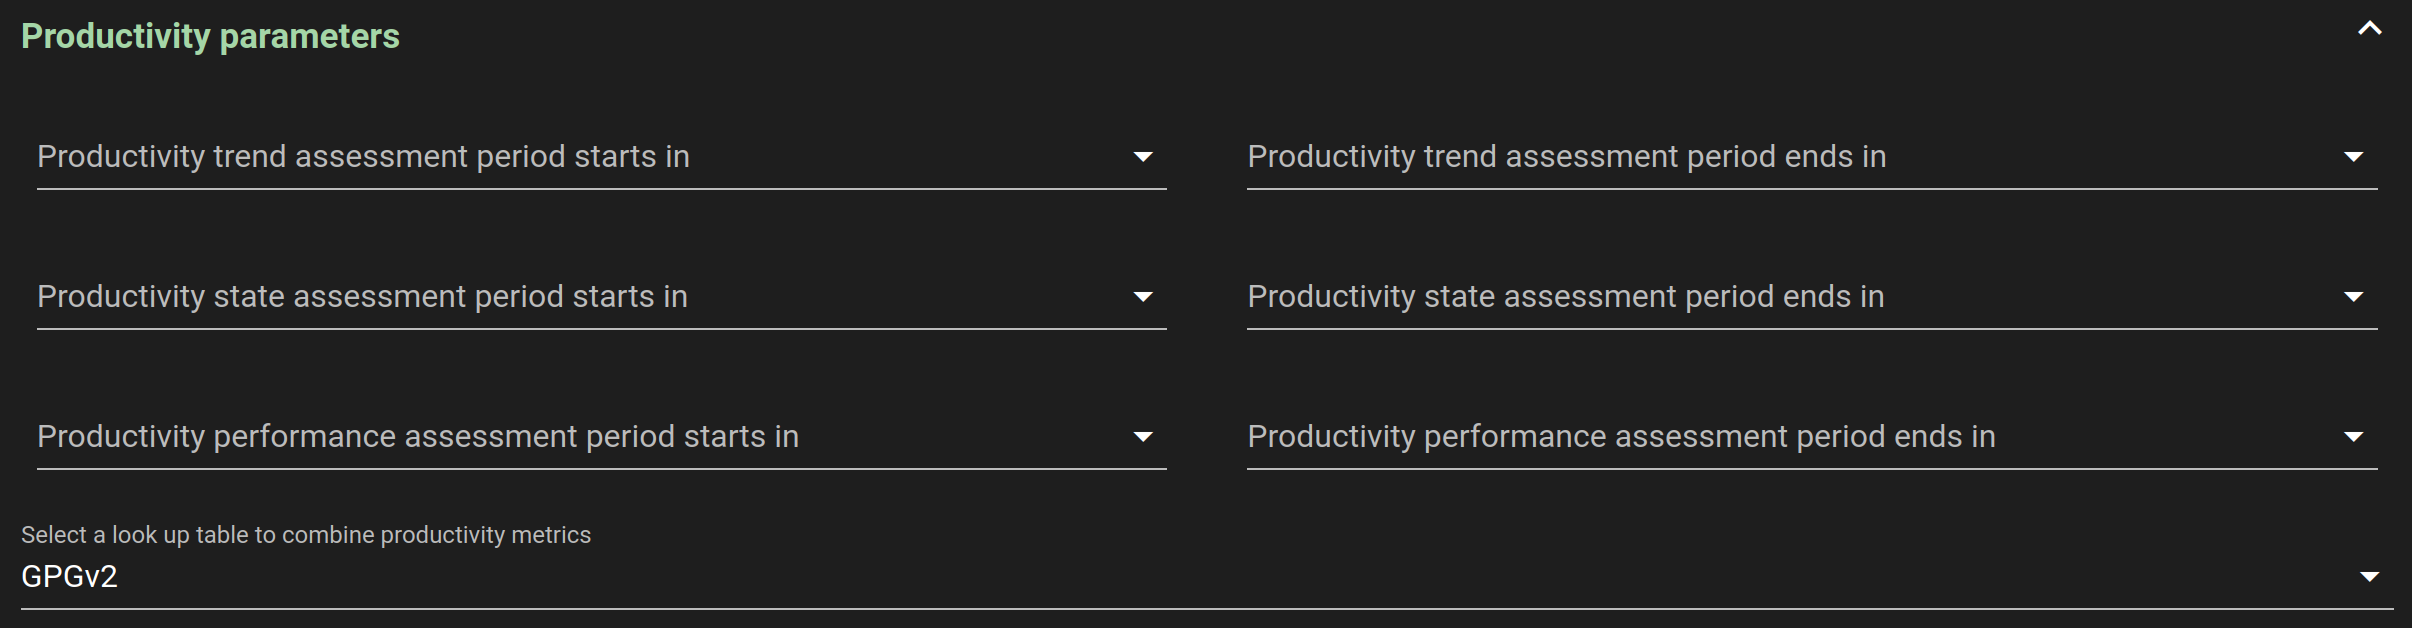 productivity parameters